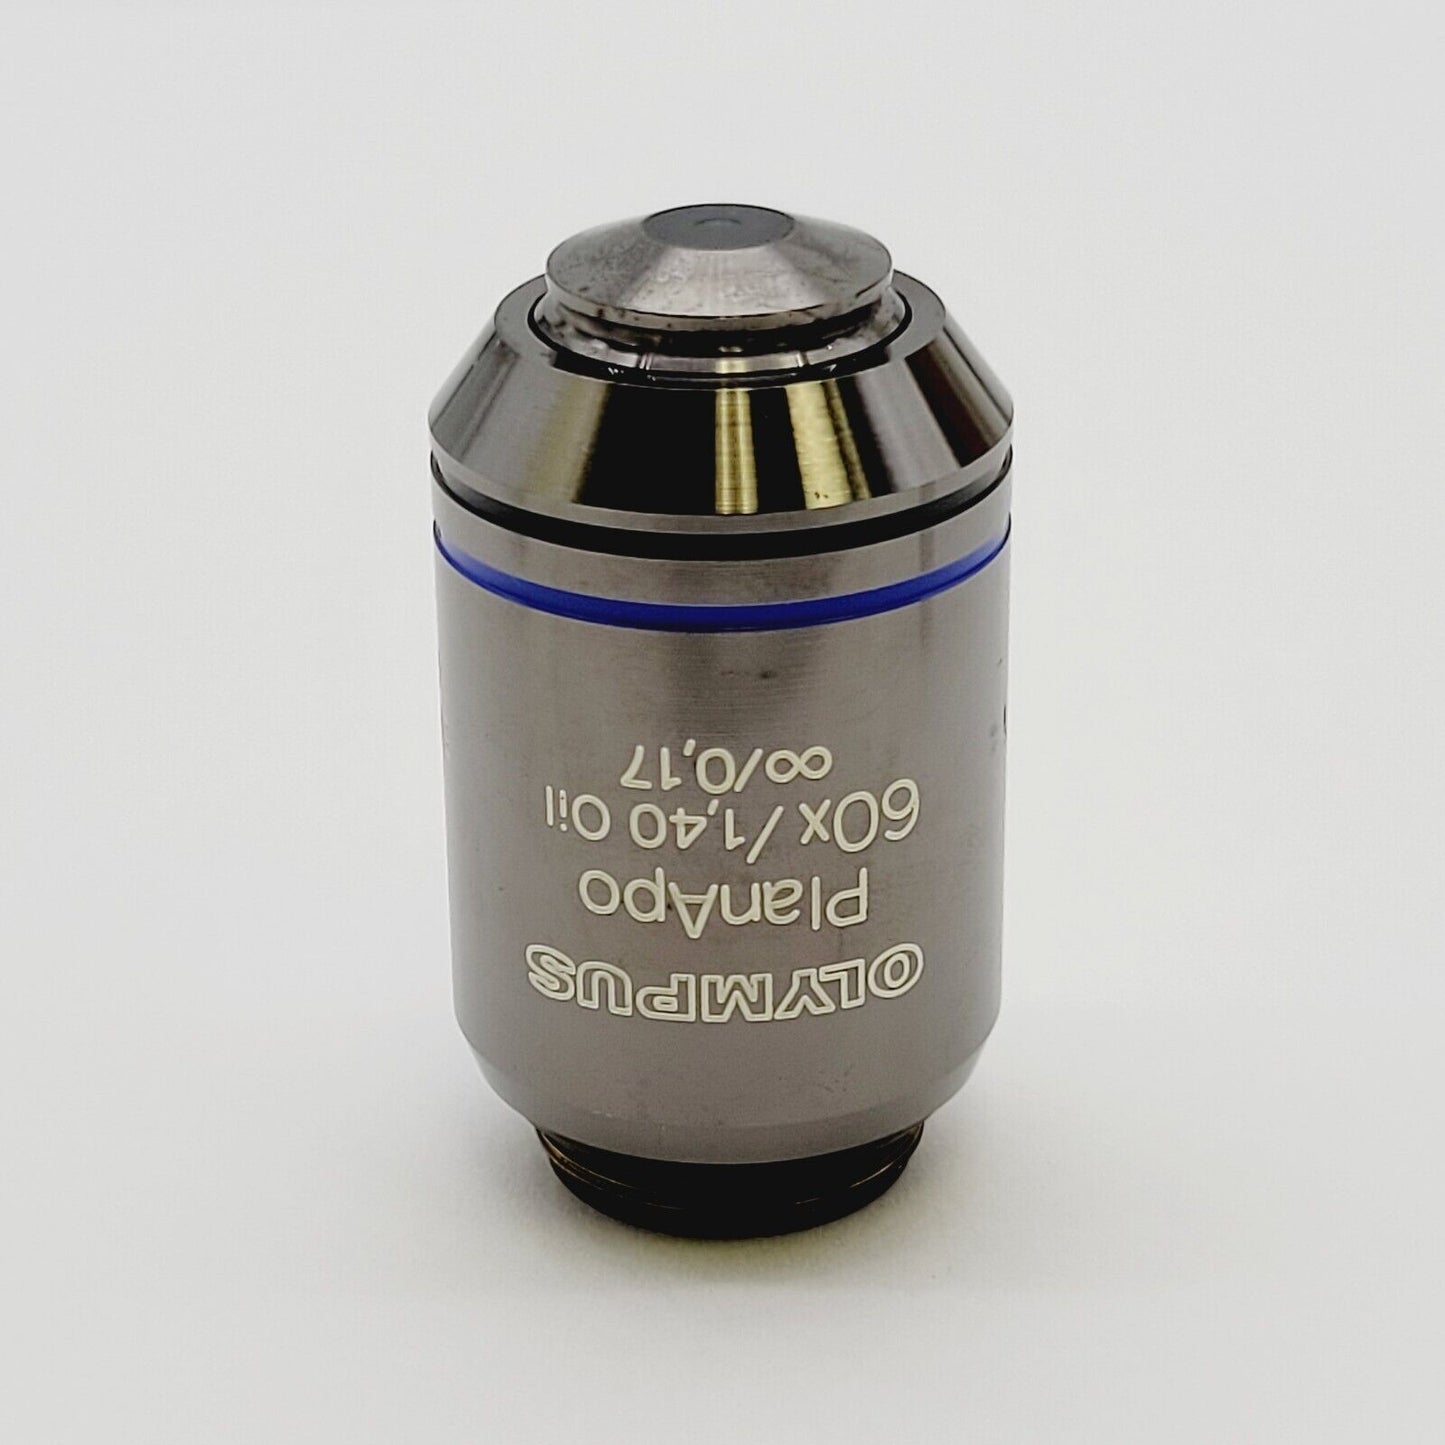 Olympus Microscope Objective PlanApo 60x Oil - microscopemarketplace